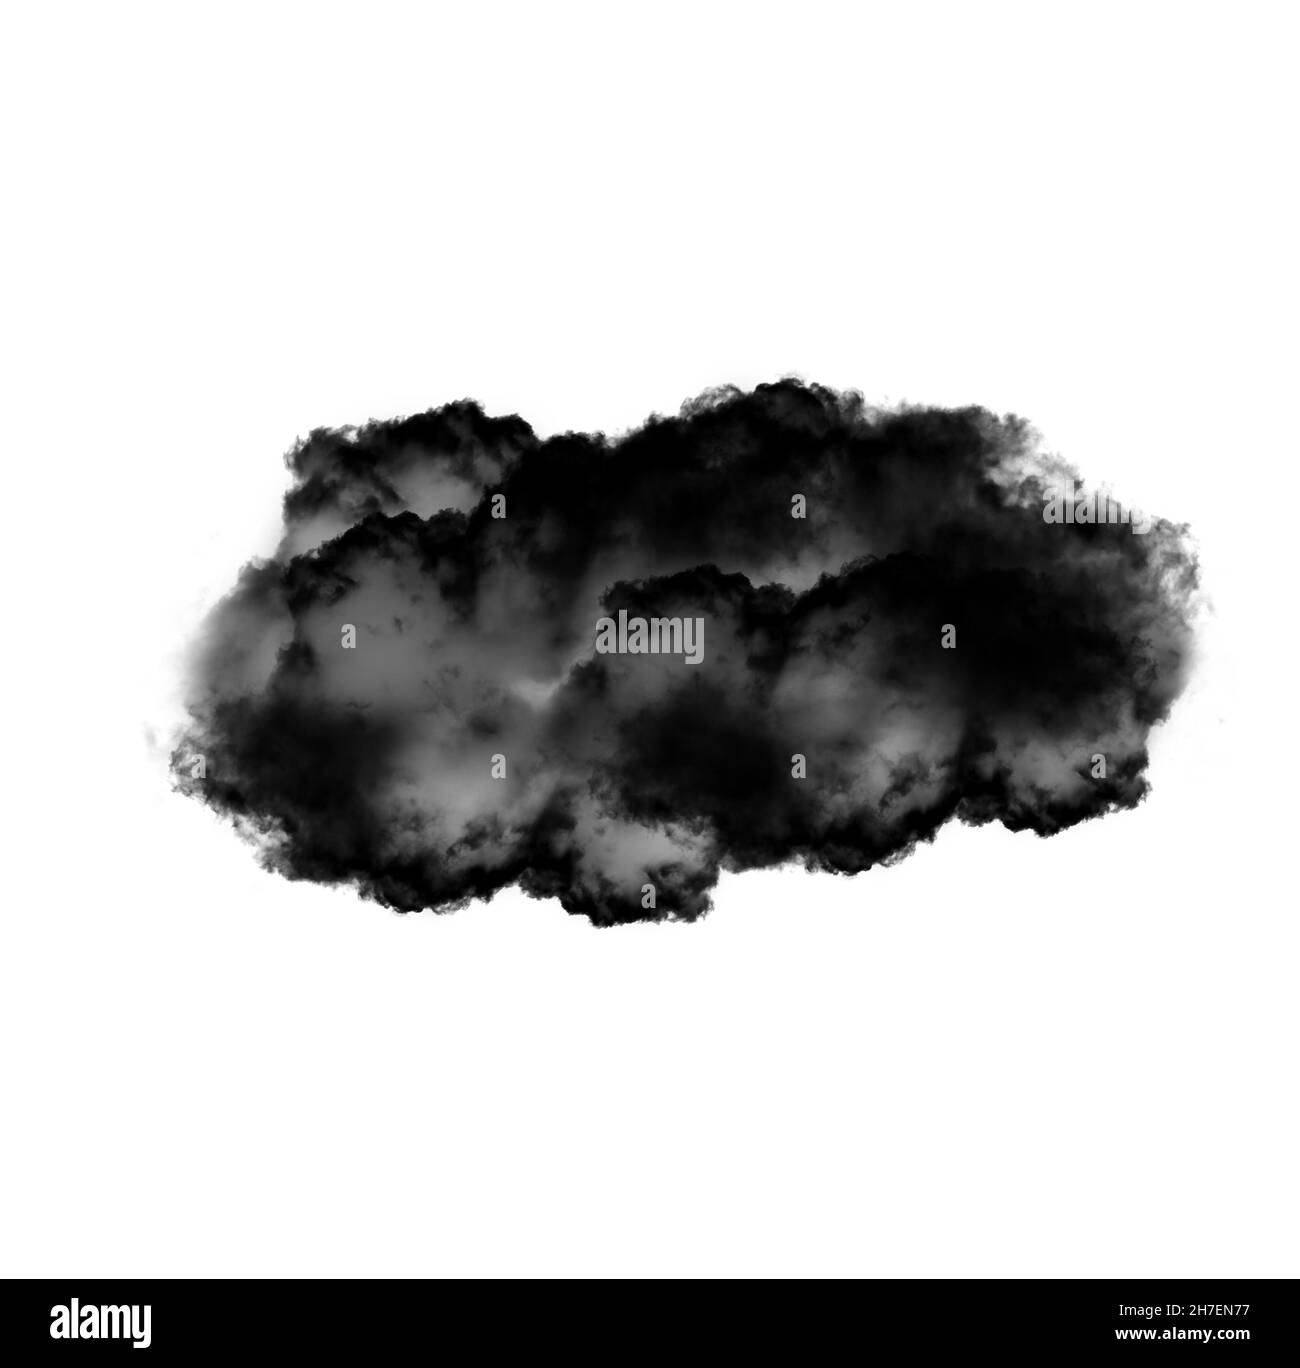 Cloud of smoke shape illustration, realistic smoky cloud isolated Stock Photo